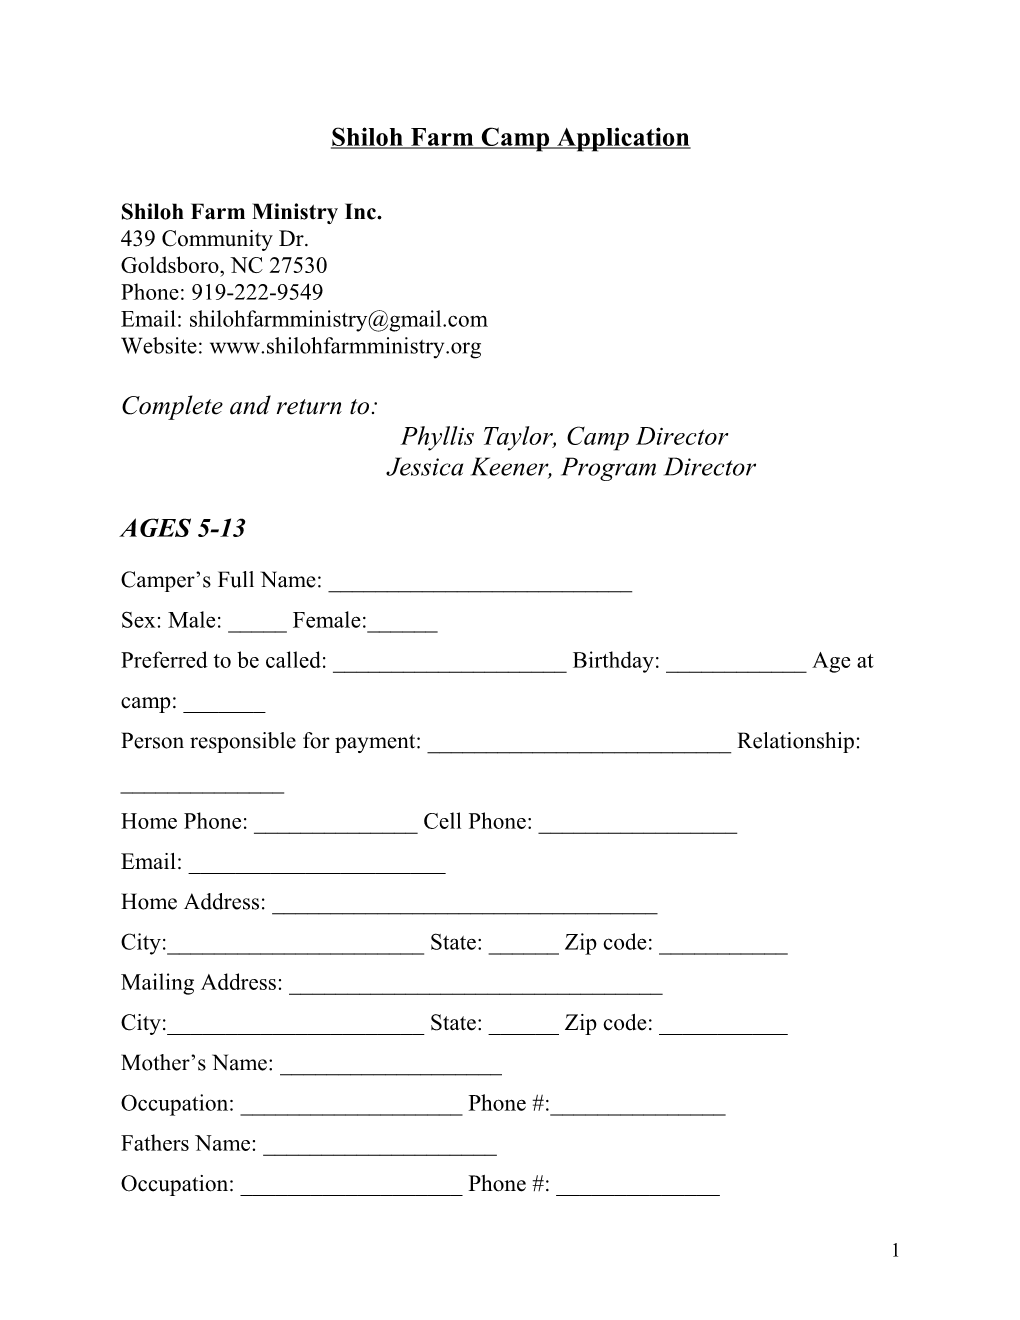 Shiloh Farm Summer Camp Application